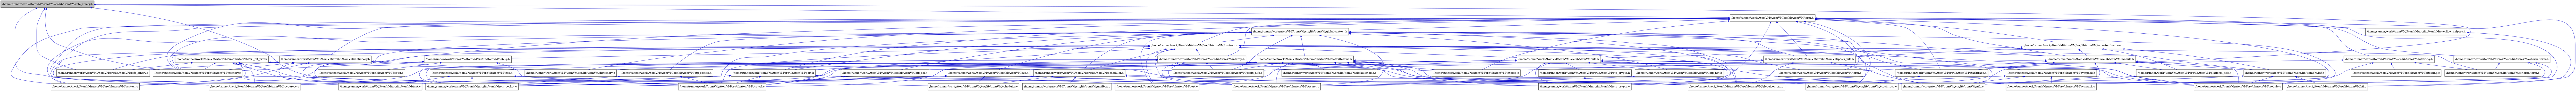 digraph {
    graph [bgcolor="#00000000"]
    node [shape=rectangle style=filled fillcolor="#FFFFFF" font=Helvetica padding=2]
    edge [color="#1414CE"]
    "8" [label="/home/runner/work/AtomVM/AtomVM/src/libAtomVM/bif.c" tooltip="/home/runner/work/AtomVM/AtomVM/src/libAtomVM/bif.c"]
    "44" [label="/home/runner/work/AtomVM/AtomVM/src/libAtomVM/dictionary.c" tooltip="/home/runner/work/AtomVM/AtomVM/src/libAtomVM/dictionary.c"]
    "16" [label="/home/runner/work/AtomVM/AtomVM/src/libAtomVM/bif.h" tooltip="/home/runner/work/AtomVM/AtomVM/src/libAtomVM/bif.h"]
    "45" [label="/home/runner/work/AtomVM/AtomVM/src/libAtomVM/dictionary.h" tooltip="/home/runner/work/AtomVM/AtomVM/src/libAtomVM/dictionary.h"]
    "10" [label="/home/runner/work/AtomVM/AtomVM/src/libAtomVM/bitstring.c" tooltip="/home/runner/work/AtomVM/AtomVM/src/libAtomVM/bitstring.c"]
    "9" [label="/home/runner/work/AtomVM/AtomVM/src/libAtomVM/bitstring.h" tooltip="/home/runner/work/AtomVM/AtomVM/src/libAtomVM/bitstring.h"]
    "31" [label="/home/runner/work/AtomVM/AtomVM/src/libAtomVM/platform_nifs.h" tooltip="/home/runner/work/AtomVM/AtomVM/src/libAtomVM/platform_nifs.h"]
    "23" [label="/home/runner/work/AtomVM/AtomVM/src/libAtomVM/posix_nifs.c" tooltip="/home/runner/work/AtomVM/AtomVM/src/libAtomVM/posix_nifs.c"]
    "47" [label="/home/runner/work/AtomVM/AtomVM/src/libAtomVM/posix_nifs.h" tooltip="/home/runner/work/AtomVM/AtomVM/src/libAtomVM/posix_nifs.h"]
    "53" [label="/home/runner/work/AtomVM/AtomVM/src/libAtomVM/defaultatoms.c" tooltip="/home/runner/work/AtomVM/AtomVM/src/libAtomVM/defaultatoms.c"]
    "52" [label="/home/runner/work/AtomVM/AtomVM/src/libAtomVM/defaultatoms.h" tooltip="/home/runner/work/AtomVM/AtomVM/src/libAtomVM/defaultatoms.h"]
    "26" [label="/home/runner/work/AtomVM/AtomVM/src/libAtomVM/inet.c" tooltip="/home/runner/work/AtomVM/AtomVM/src/libAtomVM/inet.c"]
    "25" [label="/home/runner/work/AtomVM/AtomVM/src/libAtomVM/inet.h" tooltip="/home/runner/work/AtomVM/AtomVM/src/libAtomVM/inet.h"]
    "20" [label="/home/runner/work/AtomVM/AtomVM/src/libAtomVM/scheduler.c" tooltip="/home/runner/work/AtomVM/AtomVM/src/libAtomVM/scheduler.c"]
    "42" [label="/home/runner/work/AtomVM/AtomVM/src/libAtomVM/scheduler.h" tooltip="/home/runner/work/AtomVM/AtomVM/src/libAtomVM/scheduler.h"]
    "46" [label="/home/runner/work/AtomVM/AtomVM/src/libAtomVM/exportedfunction.h" tooltip="/home/runner/work/AtomVM/AtomVM/src/libAtomVM/exportedfunction.h"]
    "14" [label="/home/runner/work/AtomVM/AtomVM/src/libAtomVM/context.c" tooltip="/home/runner/work/AtomVM/AtomVM/src/libAtomVM/context.c"]
    "15" [label="/home/runner/work/AtomVM/AtomVM/src/libAtomVM/context.h" tooltip="/home/runner/work/AtomVM/AtomVM/src/libAtomVM/context.h"]
    "40" [label="/home/runner/work/AtomVM/AtomVM/src/libAtomVM/port.c" tooltip="/home/runner/work/AtomVM/AtomVM/src/libAtomVM/port.c"]
    "41" [label="/home/runner/work/AtomVM/AtomVM/src/libAtomVM/port.h" tooltip="/home/runner/work/AtomVM/AtomVM/src/libAtomVM/port.h"]
    "54" [label="/home/runner/work/AtomVM/AtomVM/src/libAtomVM/overflow_helpers.h" tooltip="/home/runner/work/AtomVM/AtomVM/src/libAtomVM/overflow_helpers.h"]
    "33" [label="/home/runner/work/AtomVM/AtomVM/src/libAtomVM/stacktrace.c" tooltip="/home/runner/work/AtomVM/AtomVM/src/libAtomVM/stacktrace.c"]
    "32" [label="/home/runner/work/AtomVM/AtomVM/src/libAtomVM/stacktrace.h" tooltip="/home/runner/work/AtomVM/AtomVM/src/libAtomVM/stacktrace.h"]
    "5" [label="/home/runner/work/AtomVM/AtomVM/src/libAtomVM/refc_binary.c" tooltip="/home/runner/work/AtomVM/AtomVM/src/libAtomVM/refc_binary.c"]
    "1" [label="/home/runner/work/AtomVM/AtomVM/src/libAtomVM/refc_binary.h" tooltip="/home/runner/work/AtomVM/AtomVM/src/libAtomVM/refc_binary.h" fillcolor="#BFBFBF"]
    "43" [label="/home/runner/work/AtomVM/AtomVM/src/libAtomVM/mailbox.c" tooltip="/home/runner/work/AtomVM/AtomVM/src/libAtomVM/mailbox.c"]
    "17" [label="/home/runner/work/AtomVM/AtomVM/src/libAtomVM/module.c" tooltip="/home/runner/work/AtomVM/AtomVM/src/libAtomVM/module.c"]
    "30" [label="/home/runner/work/AtomVM/AtomVM/src/libAtomVM/module.h" tooltip="/home/runner/work/AtomVM/AtomVM/src/libAtomVM/module.h"]
    "51" [label="/home/runner/work/AtomVM/AtomVM/src/libAtomVM/avmpack.c" tooltip="/home/runner/work/AtomVM/AtomVM/src/libAtomVM/avmpack.c"]
    "50" [label="/home/runner/work/AtomVM/AtomVM/src/libAtomVM/avmpack.h" tooltip="/home/runner/work/AtomVM/AtomVM/src/libAtomVM/avmpack.h"]
    "29" [label="/home/runner/work/AtomVM/AtomVM/src/libAtomVM/term.c" tooltip="/home/runner/work/AtomVM/AtomVM/src/libAtomVM/term.c"]
    "7" [label="/home/runner/work/AtomVM/AtomVM/src/libAtomVM/term.h" tooltip="/home/runner/work/AtomVM/AtomVM/src/libAtomVM/term.h"]
    "12" [label="/home/runner/work/AtomVM/AtomVM/src/libAtomVM/interop.c" tooltip="/home/runner/work/AtomVM/AtomVM/src/libAtomVM/interop.c"]
    "4" [label="/home/runner/work/AtomVM/AtomVM/src/libAtomVM/otp_ssl.c" tooltip="/home/runner/work/AtomVM/AtomVM/src/libAtomVM/otp_ssl.c"]
    "24" [label="/home/runner/work/AtomVM/AtomVM/src/libAtomVM/interop.h" tooltip="/home/runner/work/AtomVM/AtomVM/src/libAtomVM/interop.h"]
    "39" [label="/home/runner/work/AtomVM/AtomVM/src/libAtomVM/otp_ssl.h" tooltip="/home/runner/work/AtomVM/AtomVM/src/libAtomVM/otp_ssl.h"]
    "6" [label="/home/runner/work/AtomVM/AtomVM/src/libAtomVM/resources.c" tooltip="/home/runner/work/AtomVM/AtomVM/src/libAtomVM/resources.c"]
    "28" [label="/home/runner/work/AtomVM/AtomVM/src/libAtomVM/otp_crypto.c" tooltip="/home/runner/work/AtomVM/AtomVM/src/libAtomVM/otp_crypto.c"]
    "36" [label="/home/runner/work/AtomVM/AtomVM/src/libAtomVM/otp_crypto.h" tooltip="/home/runner/work/AtomVM/AtomVM/src/libAtomVM/otp_crypto.h"]
    "27" [label="/home/runner/work/AtomVM/AtomVM/src/libAtomVM/otp_net.c" tooltip="/home/runner/work/AtomVM/AtomVM/src/libAtomVM/otp_net.c"]
    "37" [label="/home/runner/work/AtomVM/AtomVM/src/libAtomVM/otp_net.h" tooltip="/home/runner/work/AtomVM/AtomVM/src/libAtomVM/otp_net.h"]
    "21" [label="/home/runner/work/AtomVM/AtomVM/src/libAtomVM/erl_nif_priv.h" tooltip="/home/runner/work/AtomVM/AtomVM/src/libAtomVM/erl_nif_priv.h"]
    "34" [label="/home/runner/work/AtomVM/AtomVM/src/libAtomVM/sys.h" tooltip="/home/runner/work/AtomVM/AtomVM/src/libAtomVM/sys.h"]
    "13" [label="/home/runner/work/AtomVM/AtomVM/src/libAtomVM/nifs.c" tooltip="/home/runner/work/AtomVM/AtomVM/src/libAtomVM/nifs.c"]
    "35" [label="/home/runner/work/AtomVM/AtomVM/src/libAtomVM/nifs.h" tooltip="/home/runner/work/AtomVM/AtomVM/src/libAtomVM/nifs.h"]
    "19" [label="/home/runner/work/AtomVM/AtomVM/src/libAtomVM/debug.c" tooltip="/home/runner/work/AtomVM/AtomVM/src/libAtomVM/debug.c"]
    "18" [label="/home/runner/work/AtomVM/AtomVM/src/libAtomVM/debug.h" tooltip="/home/runner/work/AtomVM/AtomVM/src/libAtomVM/debug.h"]
    "2" [label="/home/runner/work/AtomVM/AtomVM/src/libAtomVM/globalcontext.c" tooltip="/home/runner/work/AtomVM/AtomVM/src/libAtomVM/globalcontext.c"]
    "49" [label="/home/runner/work/AtomVM/AtomVM/src/libAtomVM/globalcontext.h" tooltip="/home/runner/work/AtomVM/AtomVM/src/libAtomVM/globalcontext.h"]
    "3" [label="/home/runner/work/AtomVM/AtomVM/src/libAtomVM/memory.c" tooltip="/home/runner/work/AtomVM/AtomVM/src/libAtomVM/memory.c"]
    "22" [label="/home/runner/work/AtomVM/AtomVM/src/libAtomVM/otp_socket.c" tooltip="/home/runner/work/AtomVM/AtomVM/src/libAtomVM/otp_socket.c"]
    "38" [label="/home/runner/work/AtomVM/AtomVM/src/libAtomVM/otp_socket.h" tooltip="/home/runner/work/AtomVM/AtomVM/src/libAtomVM/otp_socket.h"]
    "11" [label="/home/runner/work/AtomVM/AtomVM/src/libAtomVM/externalterm.c" tooltip="/home/runner/work/AtomVM/AtomVM/src/libAtomVM/externalterm.c"]
    "48" [label="/home/runner/work/AtomVM/AtomVM/src/libAtomVM/externalterm.h" tooltip="/home/runner/work/AtomVM/AtomVM/src/libAtomVM/externalterm.h"]
    "16" -> "8" [dir=back tooltip="include"]
    "16" -> "17" [dir=back tooltip="include"]
    "16" -> "13" [dir=back tooltip="include"]
    "45" -> "8" [dir=back tooltip="include"]
    "45" -> "14" [dir=back tooltip="include"]
    "45" -> "44" [dir=back tooltip="include"]
    "45" -> "3" [dir=back tooltip="include"]
    "45" -> "13" [dir=back tooltip="include"]
    "45" -> "22" [dir=back tooltip="include"]
    "45" -> "5" [dir=back tooltip="include"]
    "9" -> "10" [dir=back tooltip="include"]
    "9" -> "11" [dir=back tooltip="include"]
    "9" -> "12" [dir=back tooltip="include"]
    "9" -> "13" [dir=back tooltip="include"]
    "31" -> "13" [dir=back tooltip="include"]
    "47" -> "2" [dir=back tooltip="include"]
    "47" -> "13" [dir=back tooltip="include"]
    "47" -> "22" [dir=back tooltip="include"]
    "47" -> "23" [dir=back tooltip="include"]
    "52" -> "8" [dir=back tooltip="include"]
    "52" -> "53" [dir=back tooltip="include"]
    "52" -> "44" [dir=back tooltip="include"]
    "52" -> "2" [dir=back tooltip="include"]
    "52" -> "12" [dir=back tooltip="include"]
    "52" -> "13" [dir=back tooltip="include"]
    "52" -> "28" [dir=back tooltip="include"]
    "52" -> "27" [dir=back tooltip="include"]
    "52" -> "22" [dir=back tooltip="include"]
    "52" -> "4" [dir=back tooltip="include"]
    "52" -> "40" [dir=back tooltip="include"]
    "52" -> "41" [dir=back tooltip="include"]
    "52" -> "23" [dir=back tooltip="include"]
    "52" -> "6" [dir=back tooltip="include"]
    "52" -> "33" [dir=back tooltip="include"]
    "25" -> "26" [dir=back tooltip="include"]
    "25" -> "27" [dir=back tooltip="include"]
    "25" -> "22" [dir=back tooltip="include"]
    "25" -> "4" [dir=back tooltip="include"]
    "42" -> "2" [dir=back tooltip="include"]
    "42" -> "43" [dir=back tooltip="include"]
    "42" -> "13" [dir=back tooltip="include"]
    "42" -> "22" [dir=back tooltip="include"]
    "42" -> "20" [dir=back tooltip="include"]
    "46" -> "16" [dir=back tooltip="include"]
    "46" -> "30" [dir=back tooltip="include"]
    "46" -> "35" [dir=back tooltip="include"]
    "46" -> "31" [dir=back tooltip="include"]
    "46" -> "47" [dir=back tooltip="include"]
    "15" -> "16" [dir=back tooltip="include"]
    "15" -> "14" [dir=back tooltip="include"]
    "15" -> "18" [dir=back tooltip="include"]
    "15" -> "21" [dir=back tooltip="include"]
    "15" -> "11" [dir=back tooltip="include"]
    "15" -> "2" [dir=back tooltip="include"]
    "15" -> "24" [dir=back tooltip="include"]
    "15" -> "3" [dir=back tooltip="include"]
    "15" -> "17" [dir=back tooltip="include"]
    "15" -> "30" [dir=back tooltip="include"]
    "15" -> "13" [dir=back tooltip="include"]
    "15" -> "35" [dir=back tooltip="include"]
    "15" -> "28" [dir=back tooltip="include"]
    "15" -> "27" [dir=back tooltip="include"]
    "15" -> "22" [dir=back tooltip="include"]
    "15" -> "4" [dir=back tooltip="include"]
    "15" -> "40" [dir=back tooltip="include"]
    "15" -> "41" [dir=back tooltip="include"]
    "15" -> "5" [dir=back tooltip="include"]
    "15" -> "6" [dir=back tooltip="include"]
    "15" -> "42" [dir=back tooltip="include"]
    "15" -> "32" [dir=back tooltip="include"]
    "15" -> "29" [dir=back tooltip="include"]
    "41" -> "26" [dir=back tooltip="include"]
    "41" -> "13" [dir=back tooltip="include"]
    "41" -> "27" [dir=back tooltip="include"]
    "41" -> "22" [dir=back tooltip="include"]
    "41" -> "4" [dir=back tooltip="include"]
    "41" -> "40" [dir=back tooltip="include"]
    "54" -> "8" [dir=back tooltip="include"]
    "32" -> "33" [dir=back tooltip="include"]
    "1" -> "2" [dir=back tooltip="include"]
    "1" -> "3" [dir=back tooltip="include"]
    "1" -> "4" [dir=back tooltip="include"]
    "1" -> "5" [dir=back tooltip="include"]
    "1" -> "6" [dir=back tooltip="include"]
    "1" -> "7" [dir=back tooltip="include"]
    "30" -> "16" [dir=back tooltip="include"]
    "30" -> "17" [dir=back tooltip="include"]
    "30" -> "13" [dir=back tooltip="include"]
    "30" -> "31" [dir=back tooltip="include"]
    "30" -> "32" [dir=back tooltip="include"]
    "30" -> "34" [dir=back tooltip="include"]
    "30" -> "29" [dir=back tooltip="include"]
    "50" -> "51" [dir=back tooltip="include"]
    "50" -> "2" [dir=back tooltip="include"]
    "50" -> "13" [dir=back tooltip="include"]
    "7" -> "8" [dir=back tooltip="include"]
    "7" -> "9" [dir=back tooltip="include"]
    "7" -> "14" [dir=back tooltip="include"]
    "7" -> "15" [dir=back tooltip="include"]
    "7" -> "44" [dir=back tooltip="include"]
    "7" -> "45" [dir=back tooltip="include"]
    "7" -> "46" [dir=back tooltip="include"]
    "7" -> "48" [dir=back tooltip="include"]
    "7" -> "49" [dir=back tooltip="include"]
    "7" -> "26" [dir=back tooltip="include"]
    "7" -> "12" [dir=back tooltip="include"]
    "7" -> "24" [dir=back tooltip="include"]
    "7" -> "3" [dir=back tooltip="include"]
    "7" -> "17" [dir=back tooltip="include"]
    "7" -> "30" [dir=back tooltip="include"]
    "7" -> "13" [dir=back tooltip="include"]
    "7" -> "28" [dir=back tooltip="include"]
    "7" -> "27" [dir=back tooltip="include"]
    "7" -> "22" [dir=back tooltip="include"]
    "7" -> "4" [dir=back tooltip="include"]
    "7" -> "54" [dir=back tooltip="include"]
    "7" -> "41" [dir=back tooltip="include"]
    "7" -> "47" [dir=back tooltip="include"]
    "7" -> "32" [dir=back tooltip="include"]
    "7" -> "29" [dir=back tooltip="include"]
    "24" -> "25" [dir=back tooltip="include"]
    "24" -> "12" [dir=back tooltip="include"]
    "24" -> "13" [dir=back tooltip="include"]
    "24" -> "28" [dir=back tooltip="include"]
    "24" -> "27" [dir=back tooltip="include"]
    "24" -> "22" [dir=back tooltip="include"]
    "24" -> "4" [dir=back tooltip="include"]
    "24" -> "23" [dir=back tooltip="include"]
    "24" -> "29" [dir=back tooltip="include"]
    "39" -> "4" [dir=back tooltip="include"]
    "36" -> "28" [dir=back tooltip="include"]
    "37" -> "27" [dir=back tooltip="include"]
    "21" -> "14" [dir=back tooltip="include"]
    "21" -> "2" [dir=back tooltip="include"]
    "21" -> "3" [dir=back tooltip="include"]
    "21" -> "22" [dir=back tooltip="include"]
    "21" -> "4" [dir=back tooltip="include"]
    "21" -> "23" [dir=back tooltip="include"]
    "21" -> "5" [dir=back tooltip="include"]
    "21" -> "6" [dir=back tooltip="include"]
    "34" -> "14" [dir=back tooltip="include"]
    "34" -> "2" [dir=back tooltip="include"]
    "34" -> "17" [dir=back tooltip="include"]
    "34" -> "13" [dir=back tooltip="include"]
    "34" -> "22" [dir=back tooltip="include"]
    "34" -> "6" [dir=back tooltip="include"]
    "34" -> "20" [dir=back tooltip="include"]
    "35" -> "17" [dir=back tooltip="include"]
    "35" -> "13" [dir=back tooltip="include"]
    "35" -> "28" [dir=back tooltip="include"]
    "35" -> "36" [dir=back tooltip="include"]
    "35" -> "27" [dir=back tooltip="include"]
    "35" -> "37" [dir=back tooltip="include"]
    "35" -> "22" [dir=back tooltip="include"]
    "35" -> "38" [dir=back tooltip="include"]
    "35" -> "4" [dir=back tooltip="include"]
    "35" -> "39" [dir=back tooltip="include"]
    "35" -> "23" [dir=back tooltip="include"]
    "18" -> "19" [dir=back tooltip="include"]
    "18" -> "3" [dir=back tooltip="include"]
    "18" -> "20" [dir=back tooltip="include"]
    "49" -> "50" [dir=back tooltip="include"]
    "49" -> "14" [dir=back tooltip="include"]
    "49" -> "15" [dir=back tooltip="include"]
    "49" -> "52" [dir=back tooltip="include"]
    "49" -> "2" [dir=back tooltip="include"]
    "49" -> "3" [dir=back tooltip="include"]
    "49" -> "17" [dir=back tooltip="include"]
    "49" -> "30" [dir=back tooltip="include"]
    "49" -> "13" [dir=back tooltip="include"]
    "49" -> "28" [dir=back tooltip="include"]
    "49" -> "27" [dir=back tooltip="include"]
    "49" -> "37" [dir=back tooltip="include"]
    "49" -> "22" [dir=back tooltip="include"]
    "49" -> "38" [dir=back tooltip="include"]
    "49" -> "4" [dir=back tooltip="include"]
    "49" -> "39" [dir=back tooltip="include"]
    "49" -> "40" [dir=back tooltip="include"]
    "49" -> "41" [dir=back tooltip="include"]
    "49" -> "23" [dir=back tooltip="include"]
    "49" -> "47" [dir=back tooltip="include"]
    "49" -> "42" [dir=back tooltip="include"]
    "49" -> "33" [dir=back tooltip="include"]
    "49" -> "34" [dir=back tooltip="include"]
    "38" -> "22" [dir=back tooltip="include"]
    "38" -> "4" [dir=back tooltip="include"]
    "48" -> "11" [dir=back tooltip="include"]
    "48" -> "17" [dir=back tooltip="include"]
    "48" -> "13" [dir=back tooltip="include"]
}